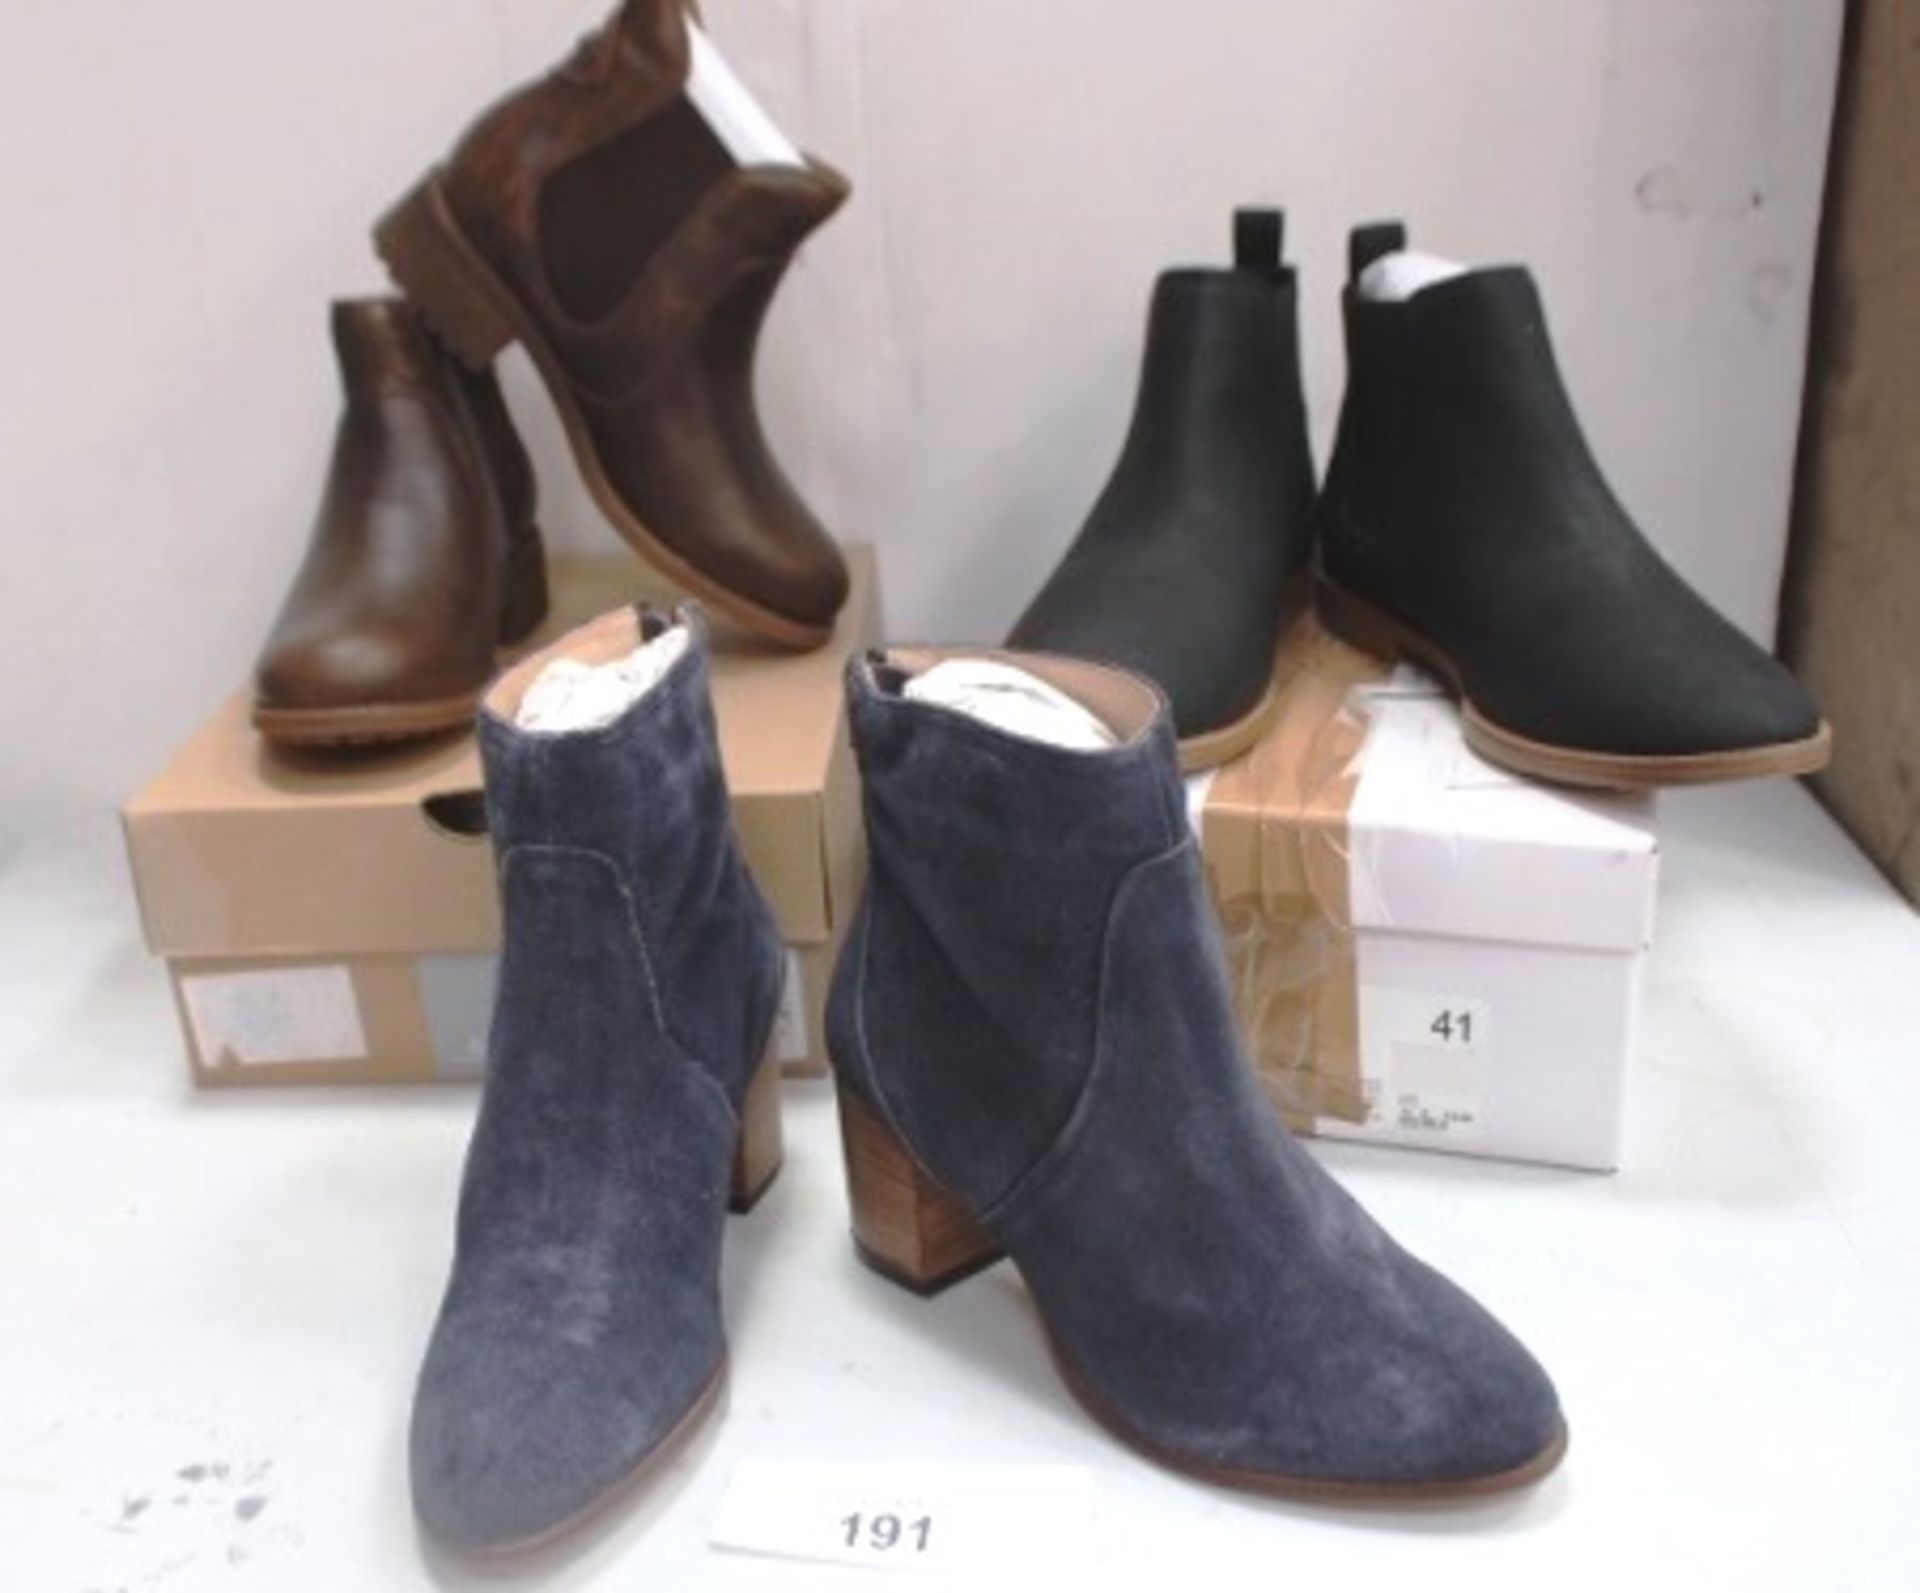 3 x pairs of ladies boots comprising 1 x pair of Ugg W Bonham, UK size 4½, 1 x pair of Crew navy mid